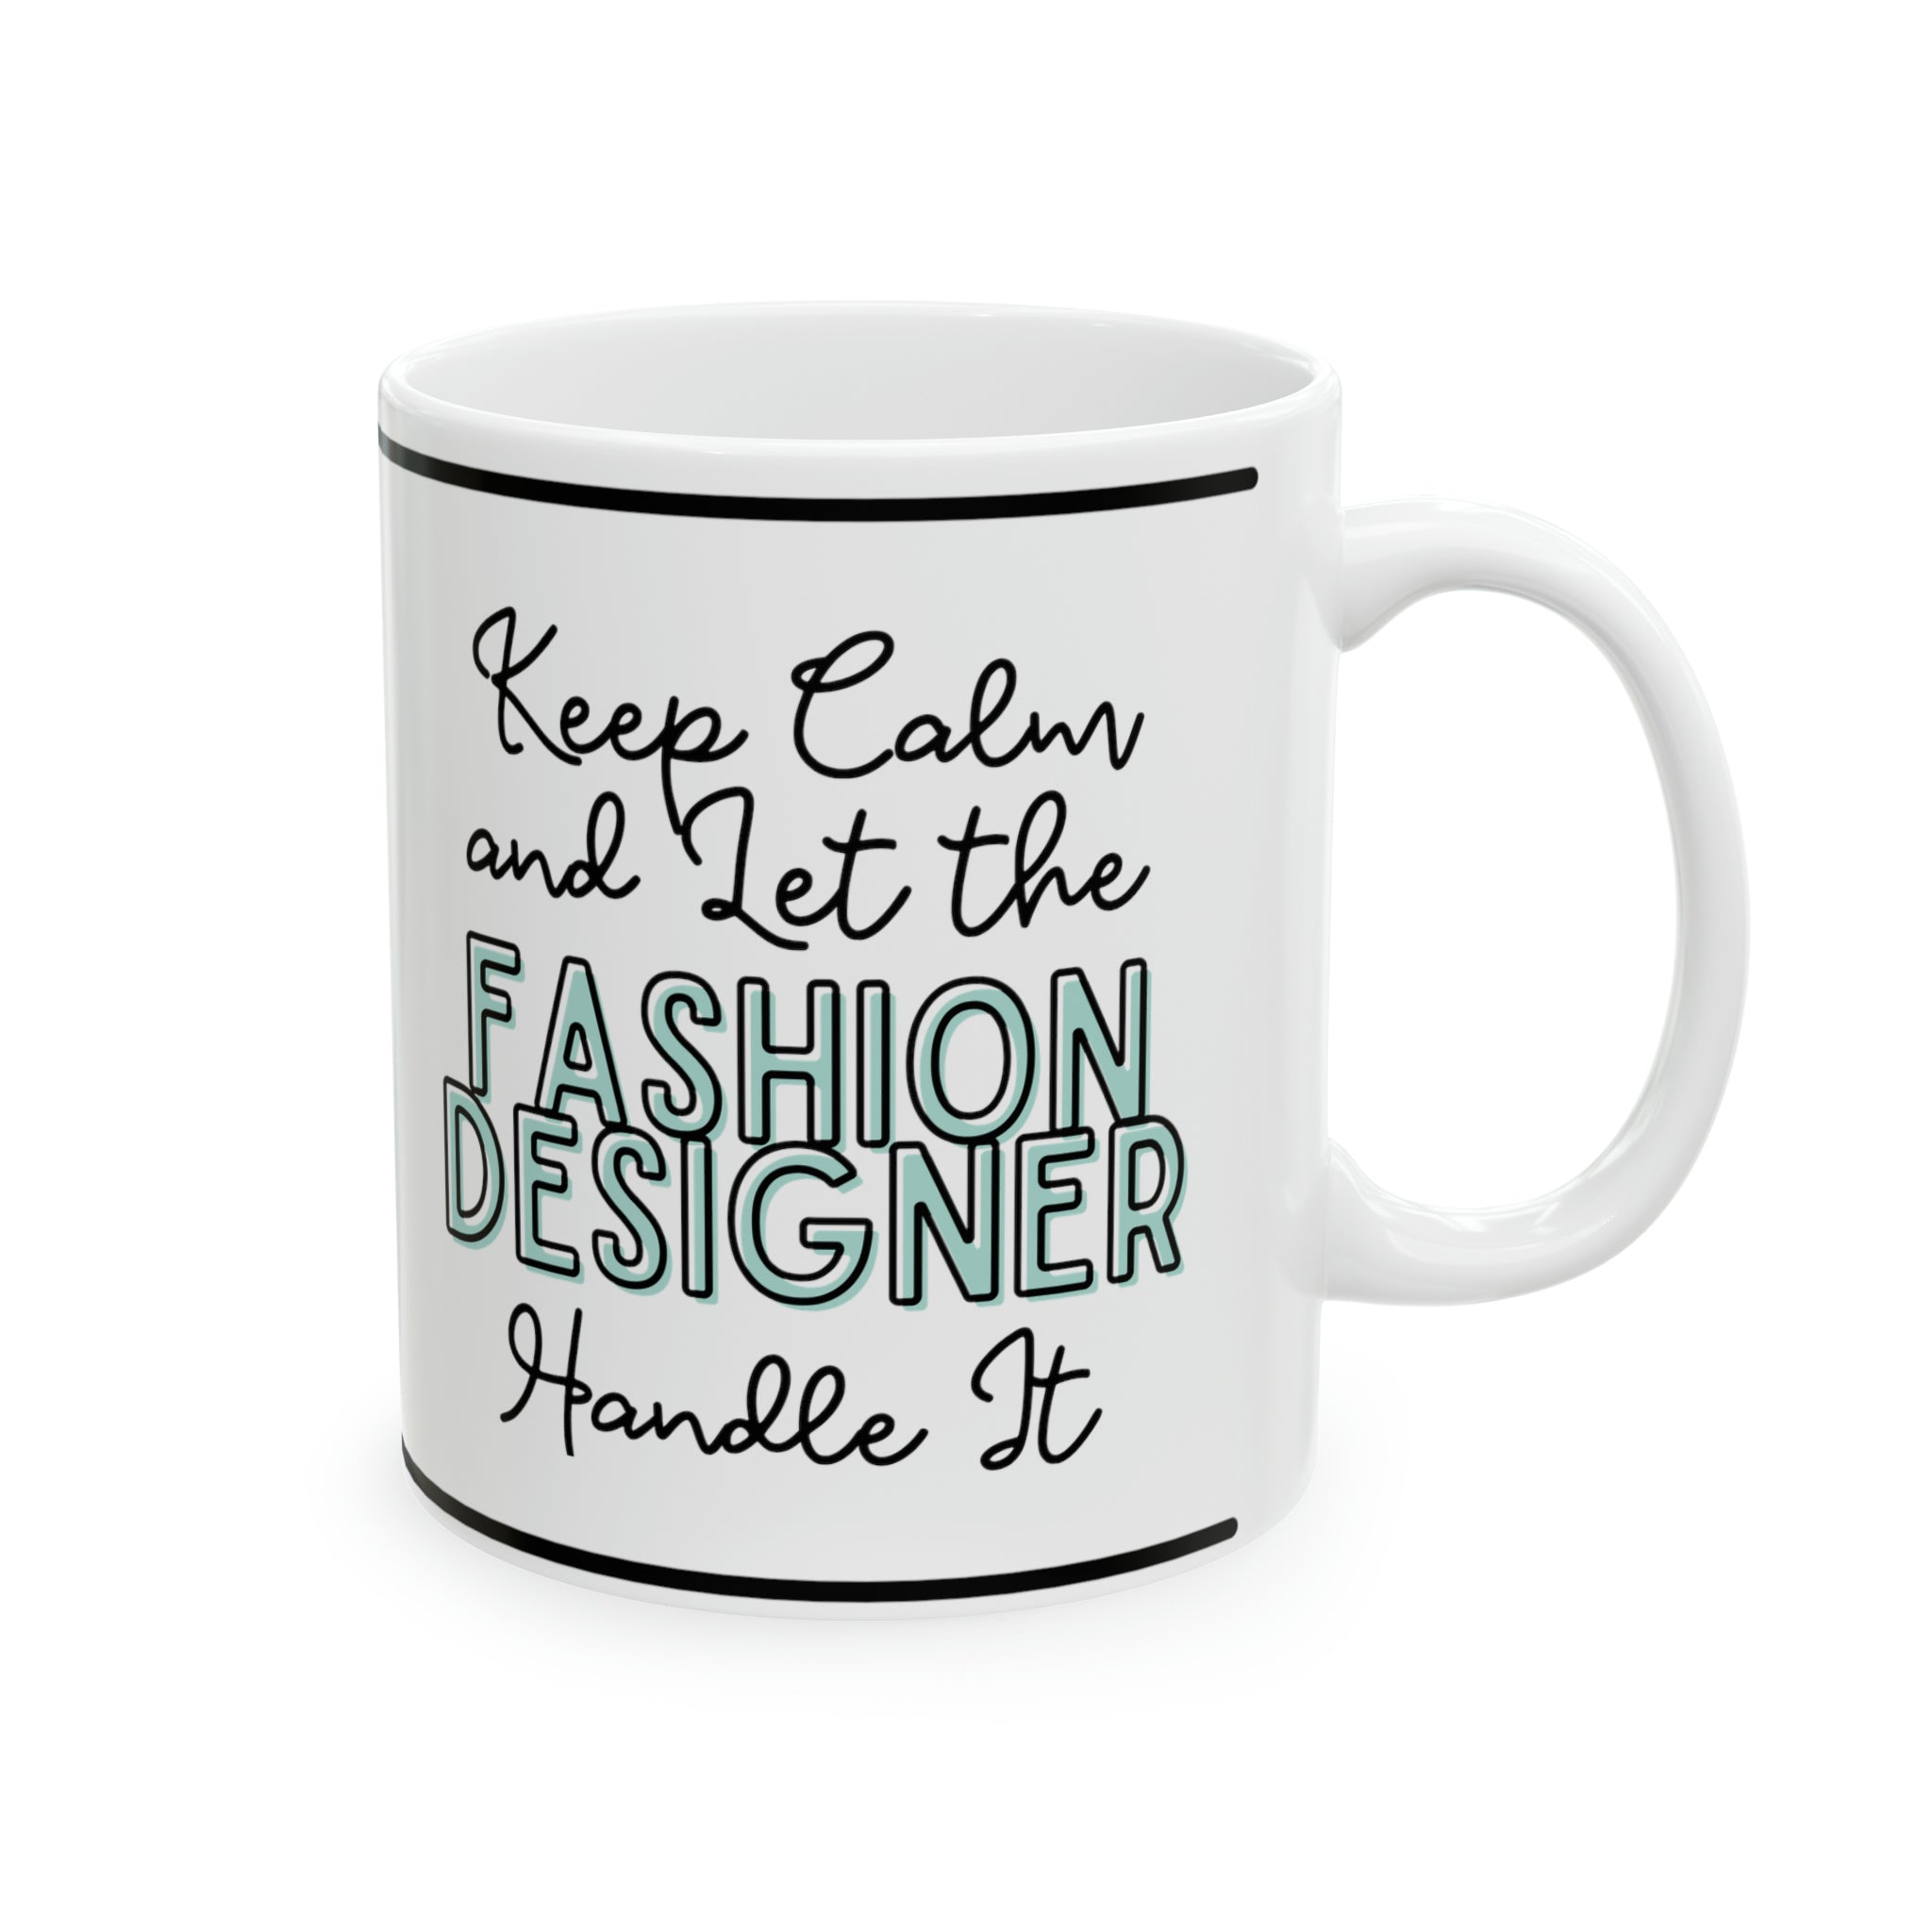 Keep Calm and let the Fashion Designer Handle It - Ceramic Mug, 11oz